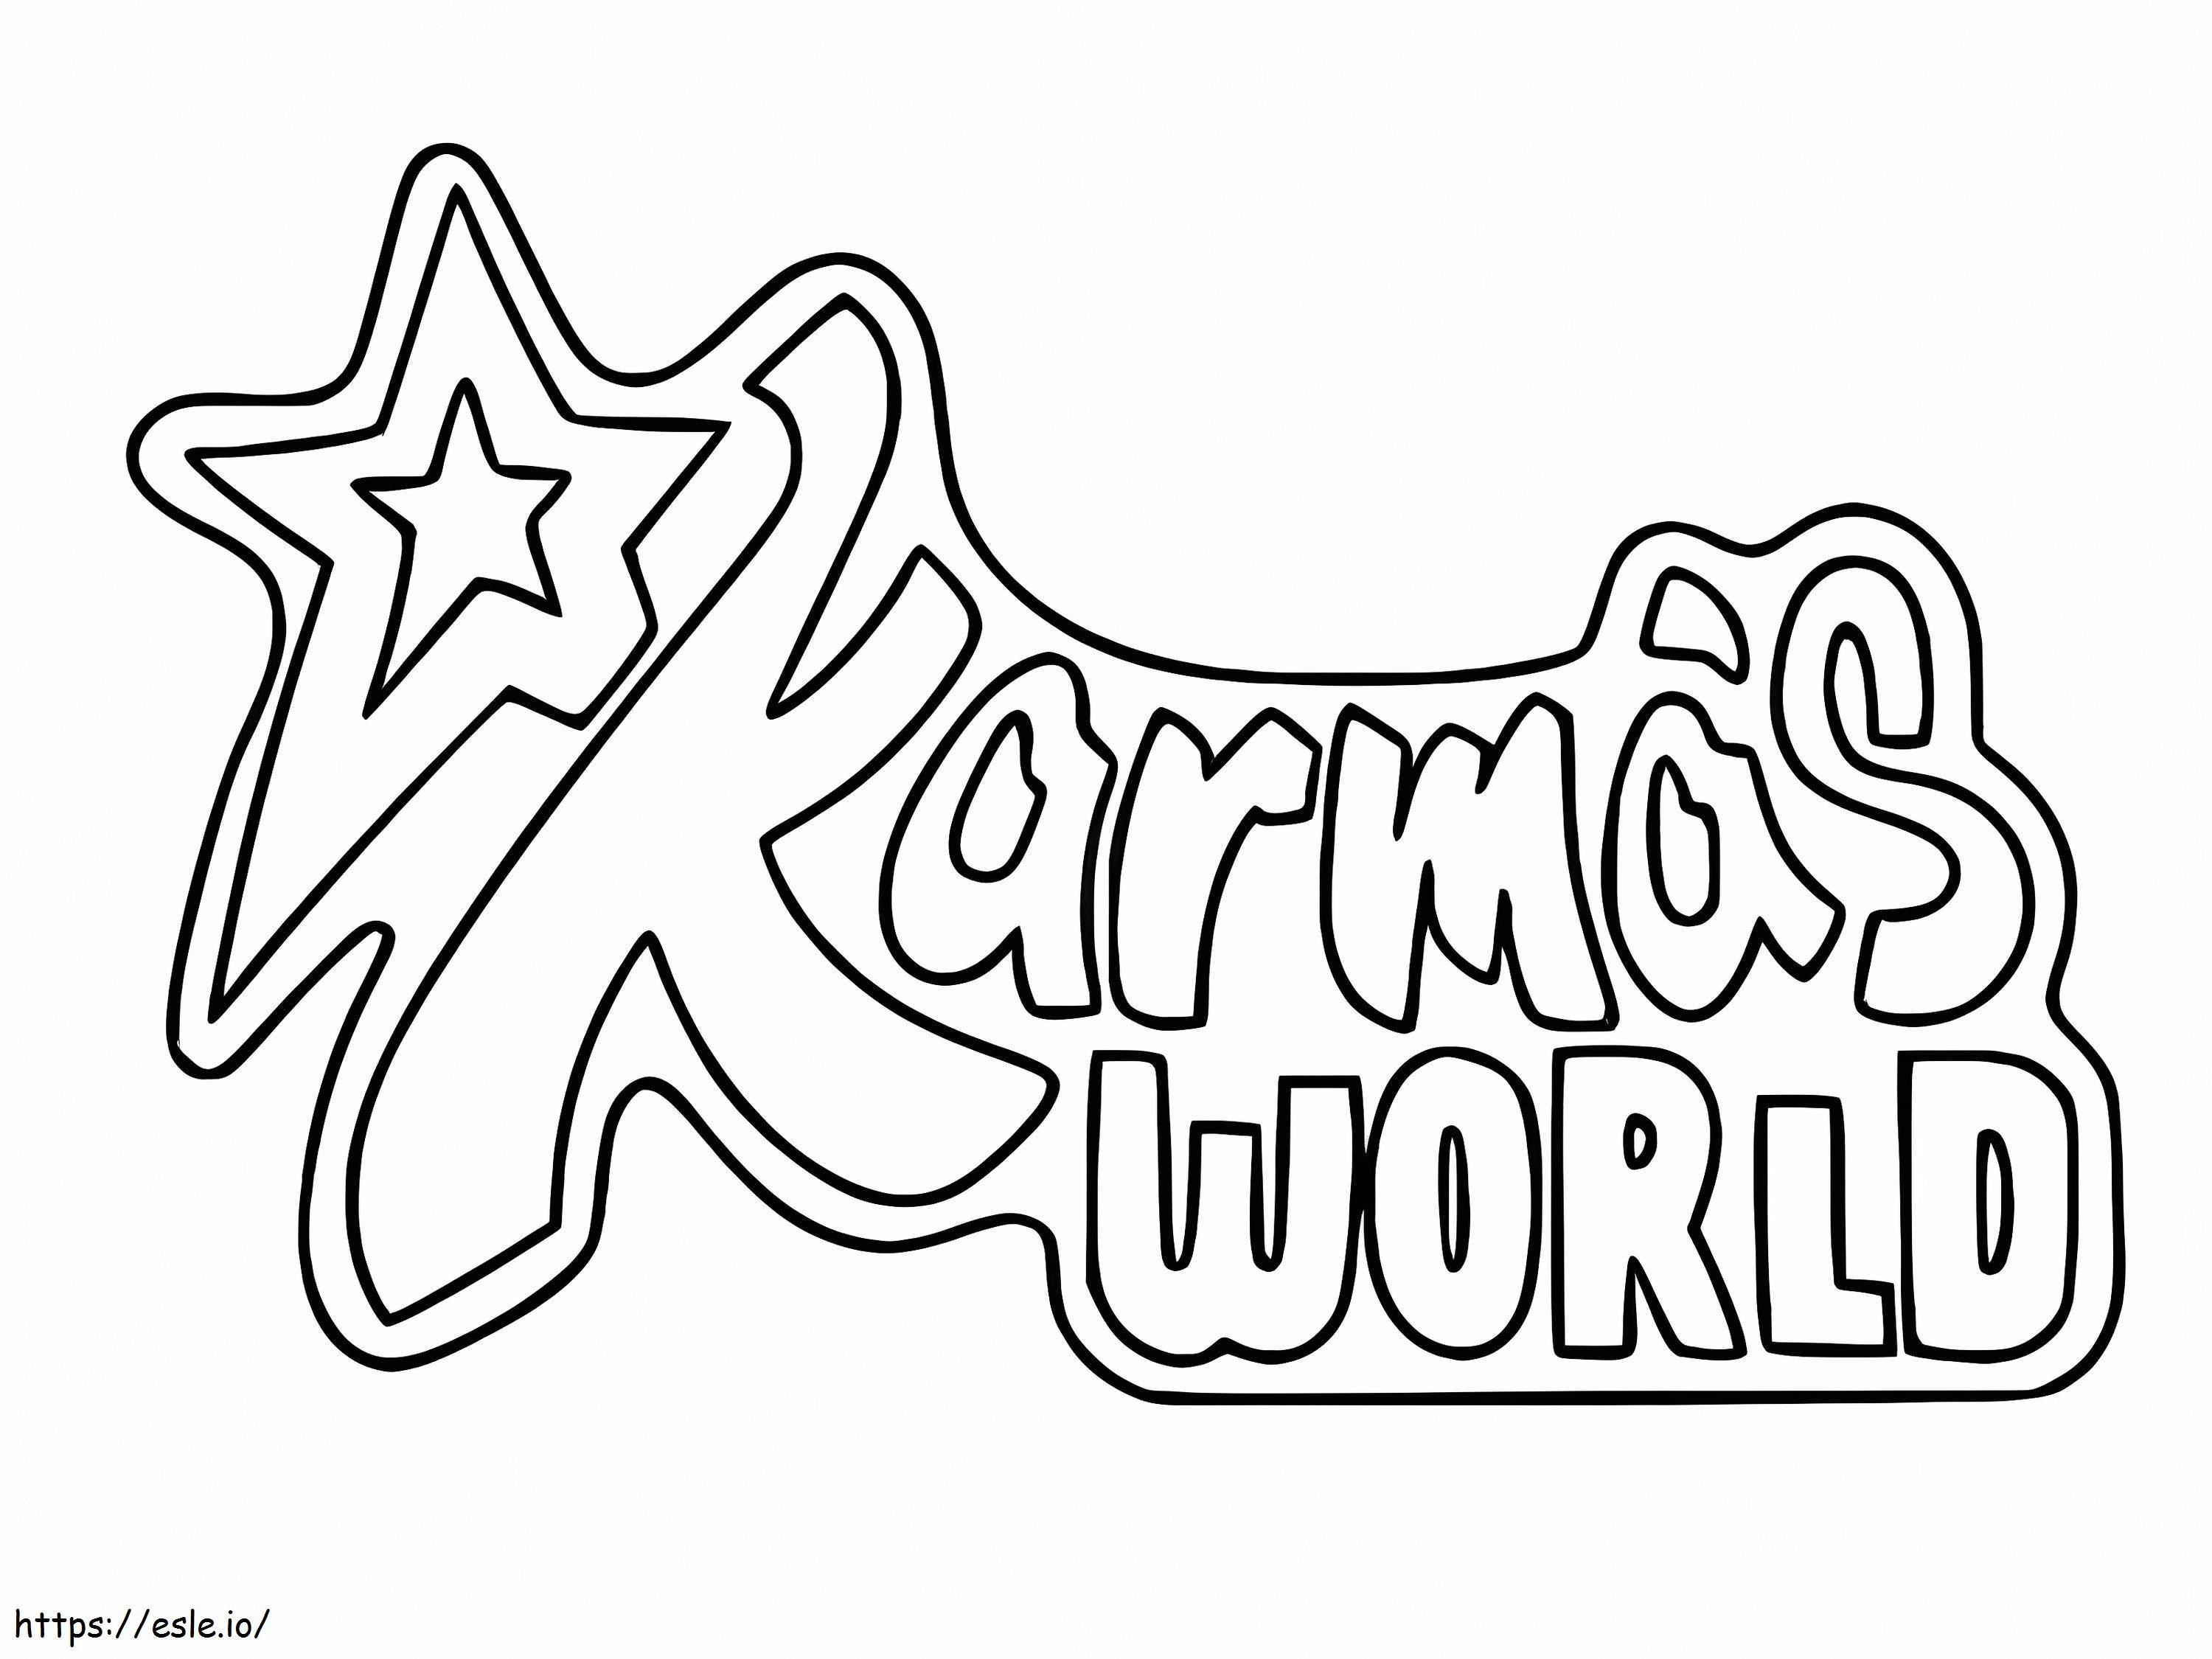 Karmas World Logo coloring page